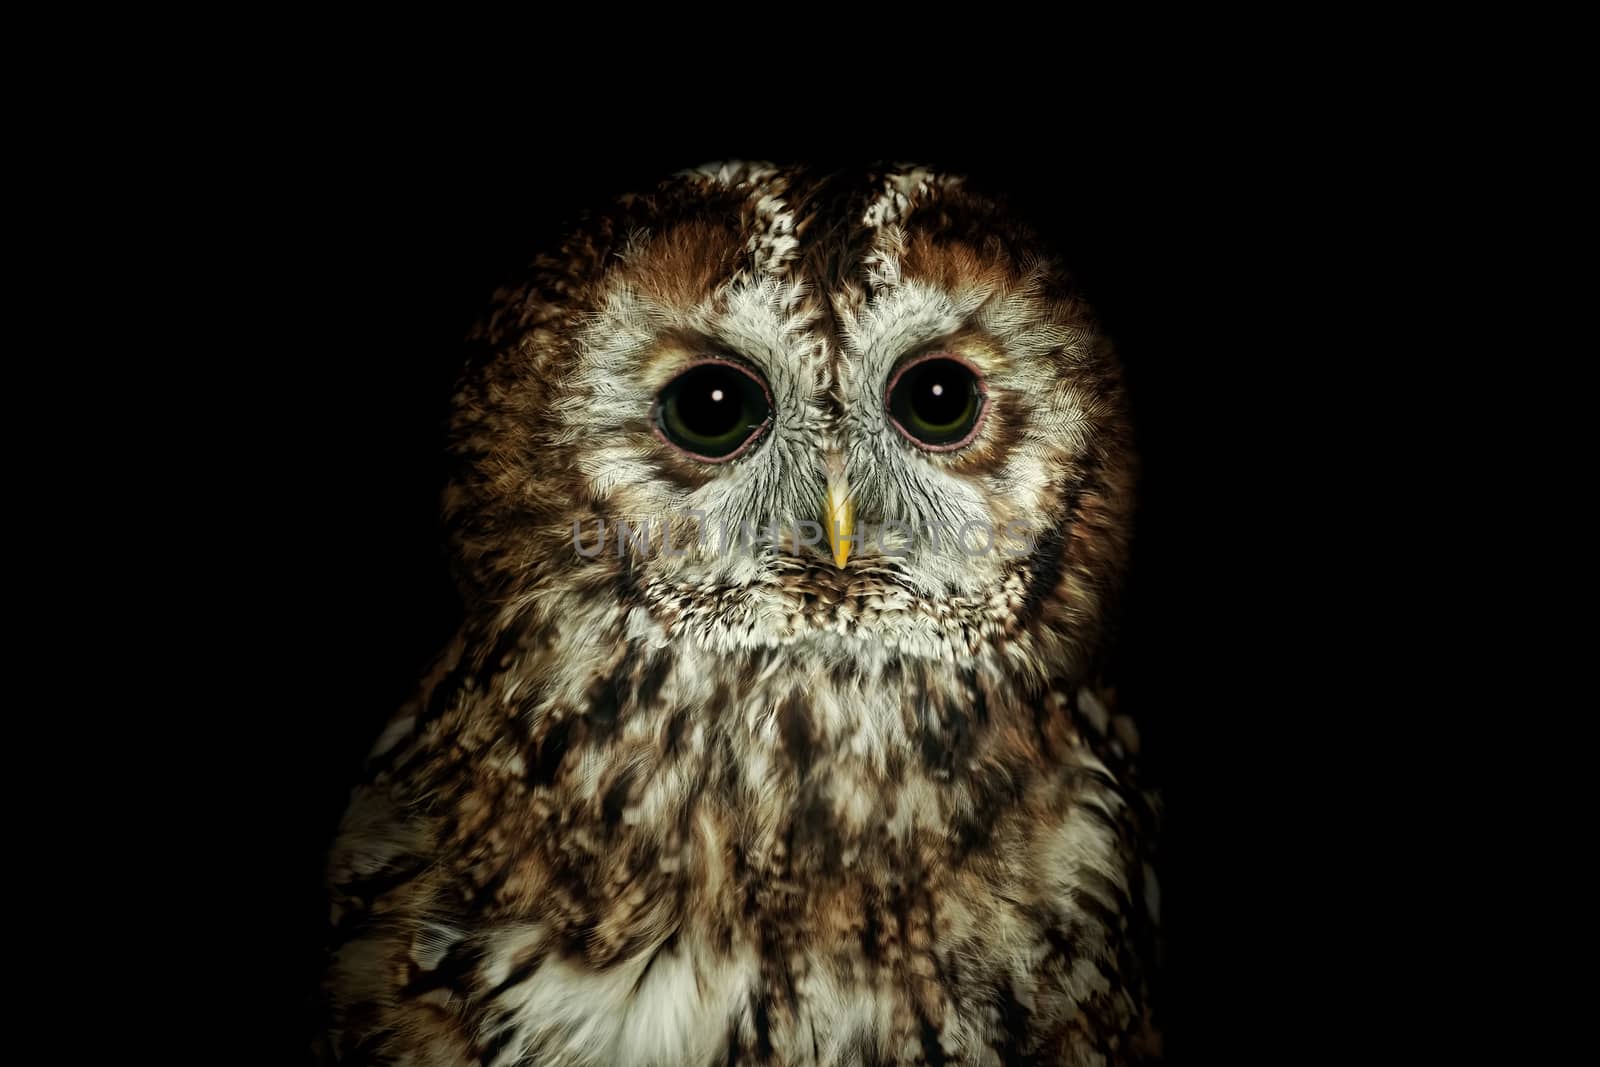 Tawny owl or brown owl (Strix aluco) by SNR